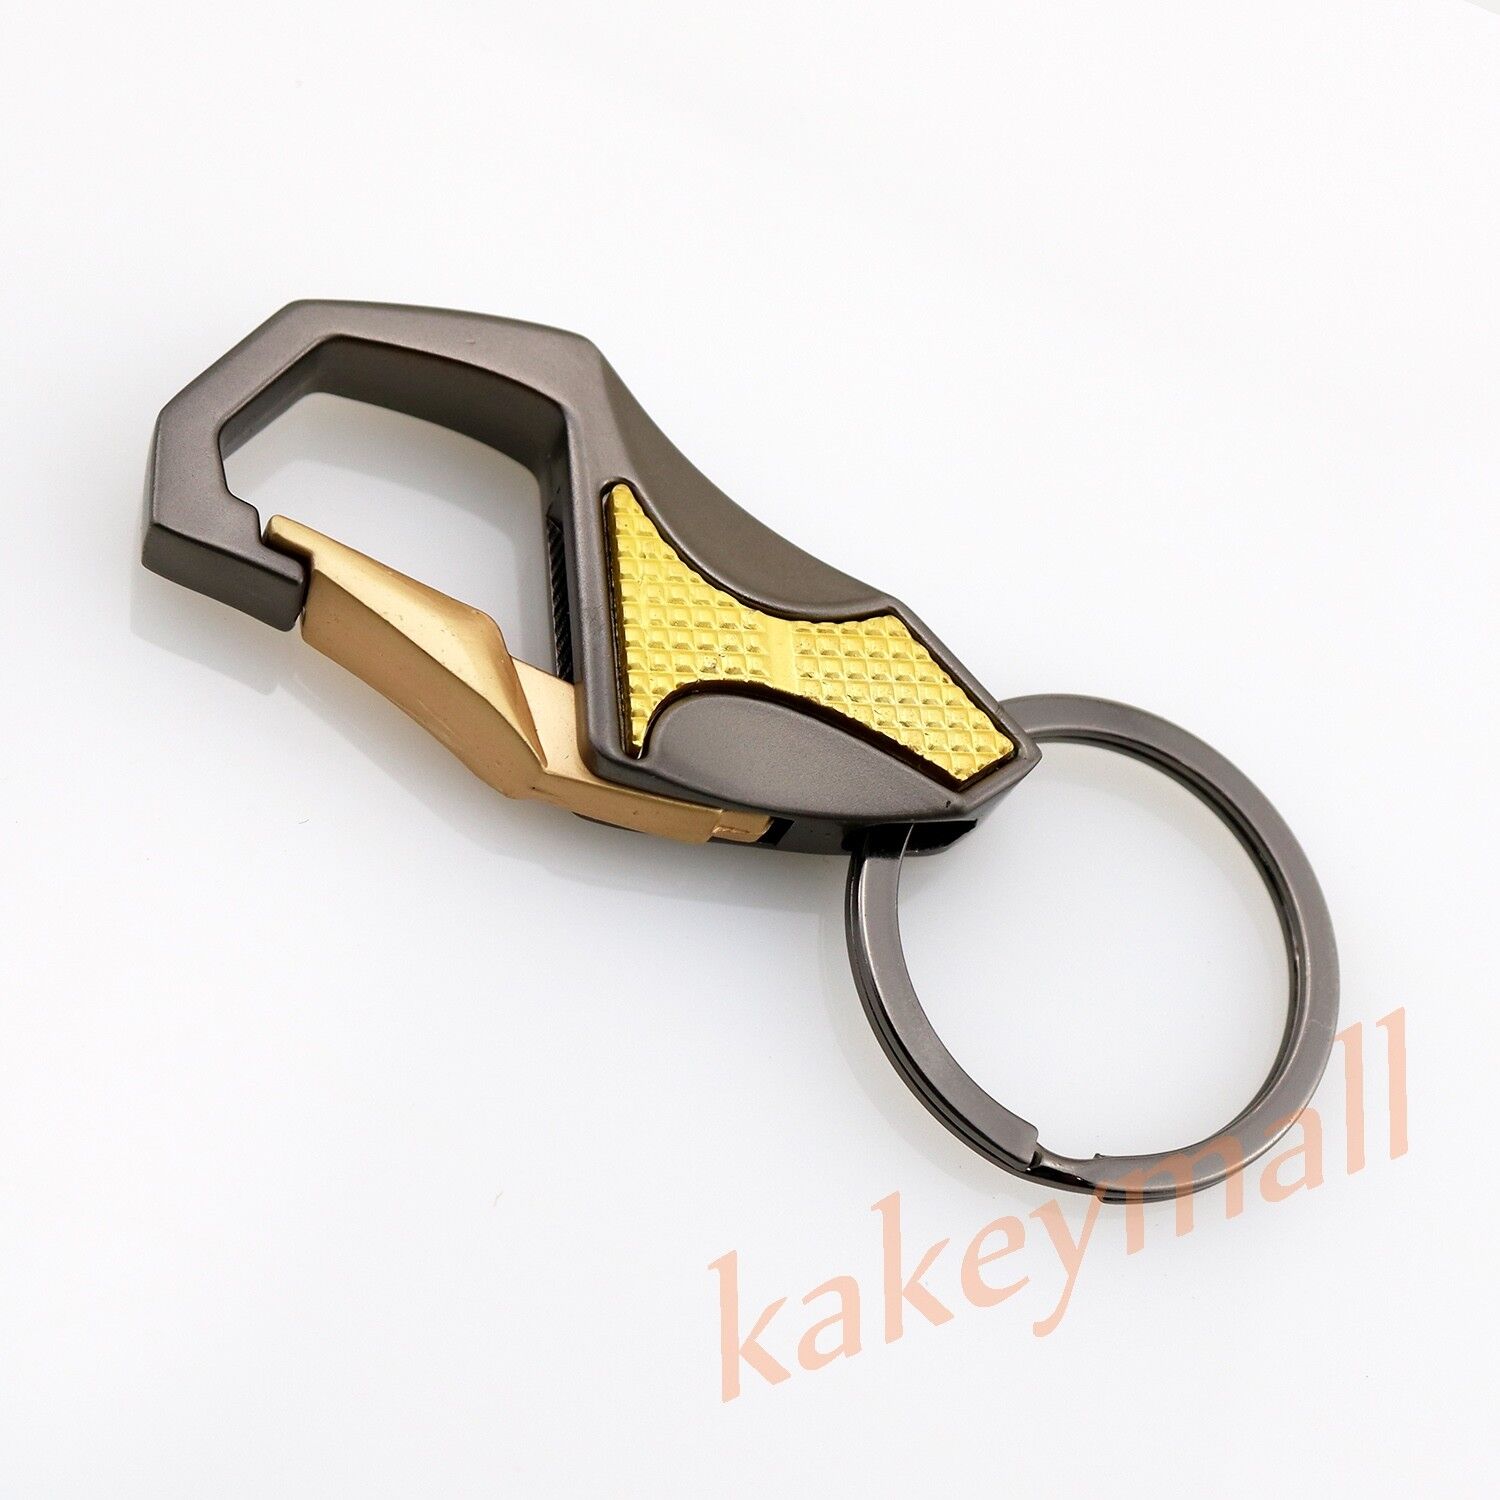 Auto Parts Metal Key Ring Chain Holder Box Case Car Fashion Gift Universal Trim